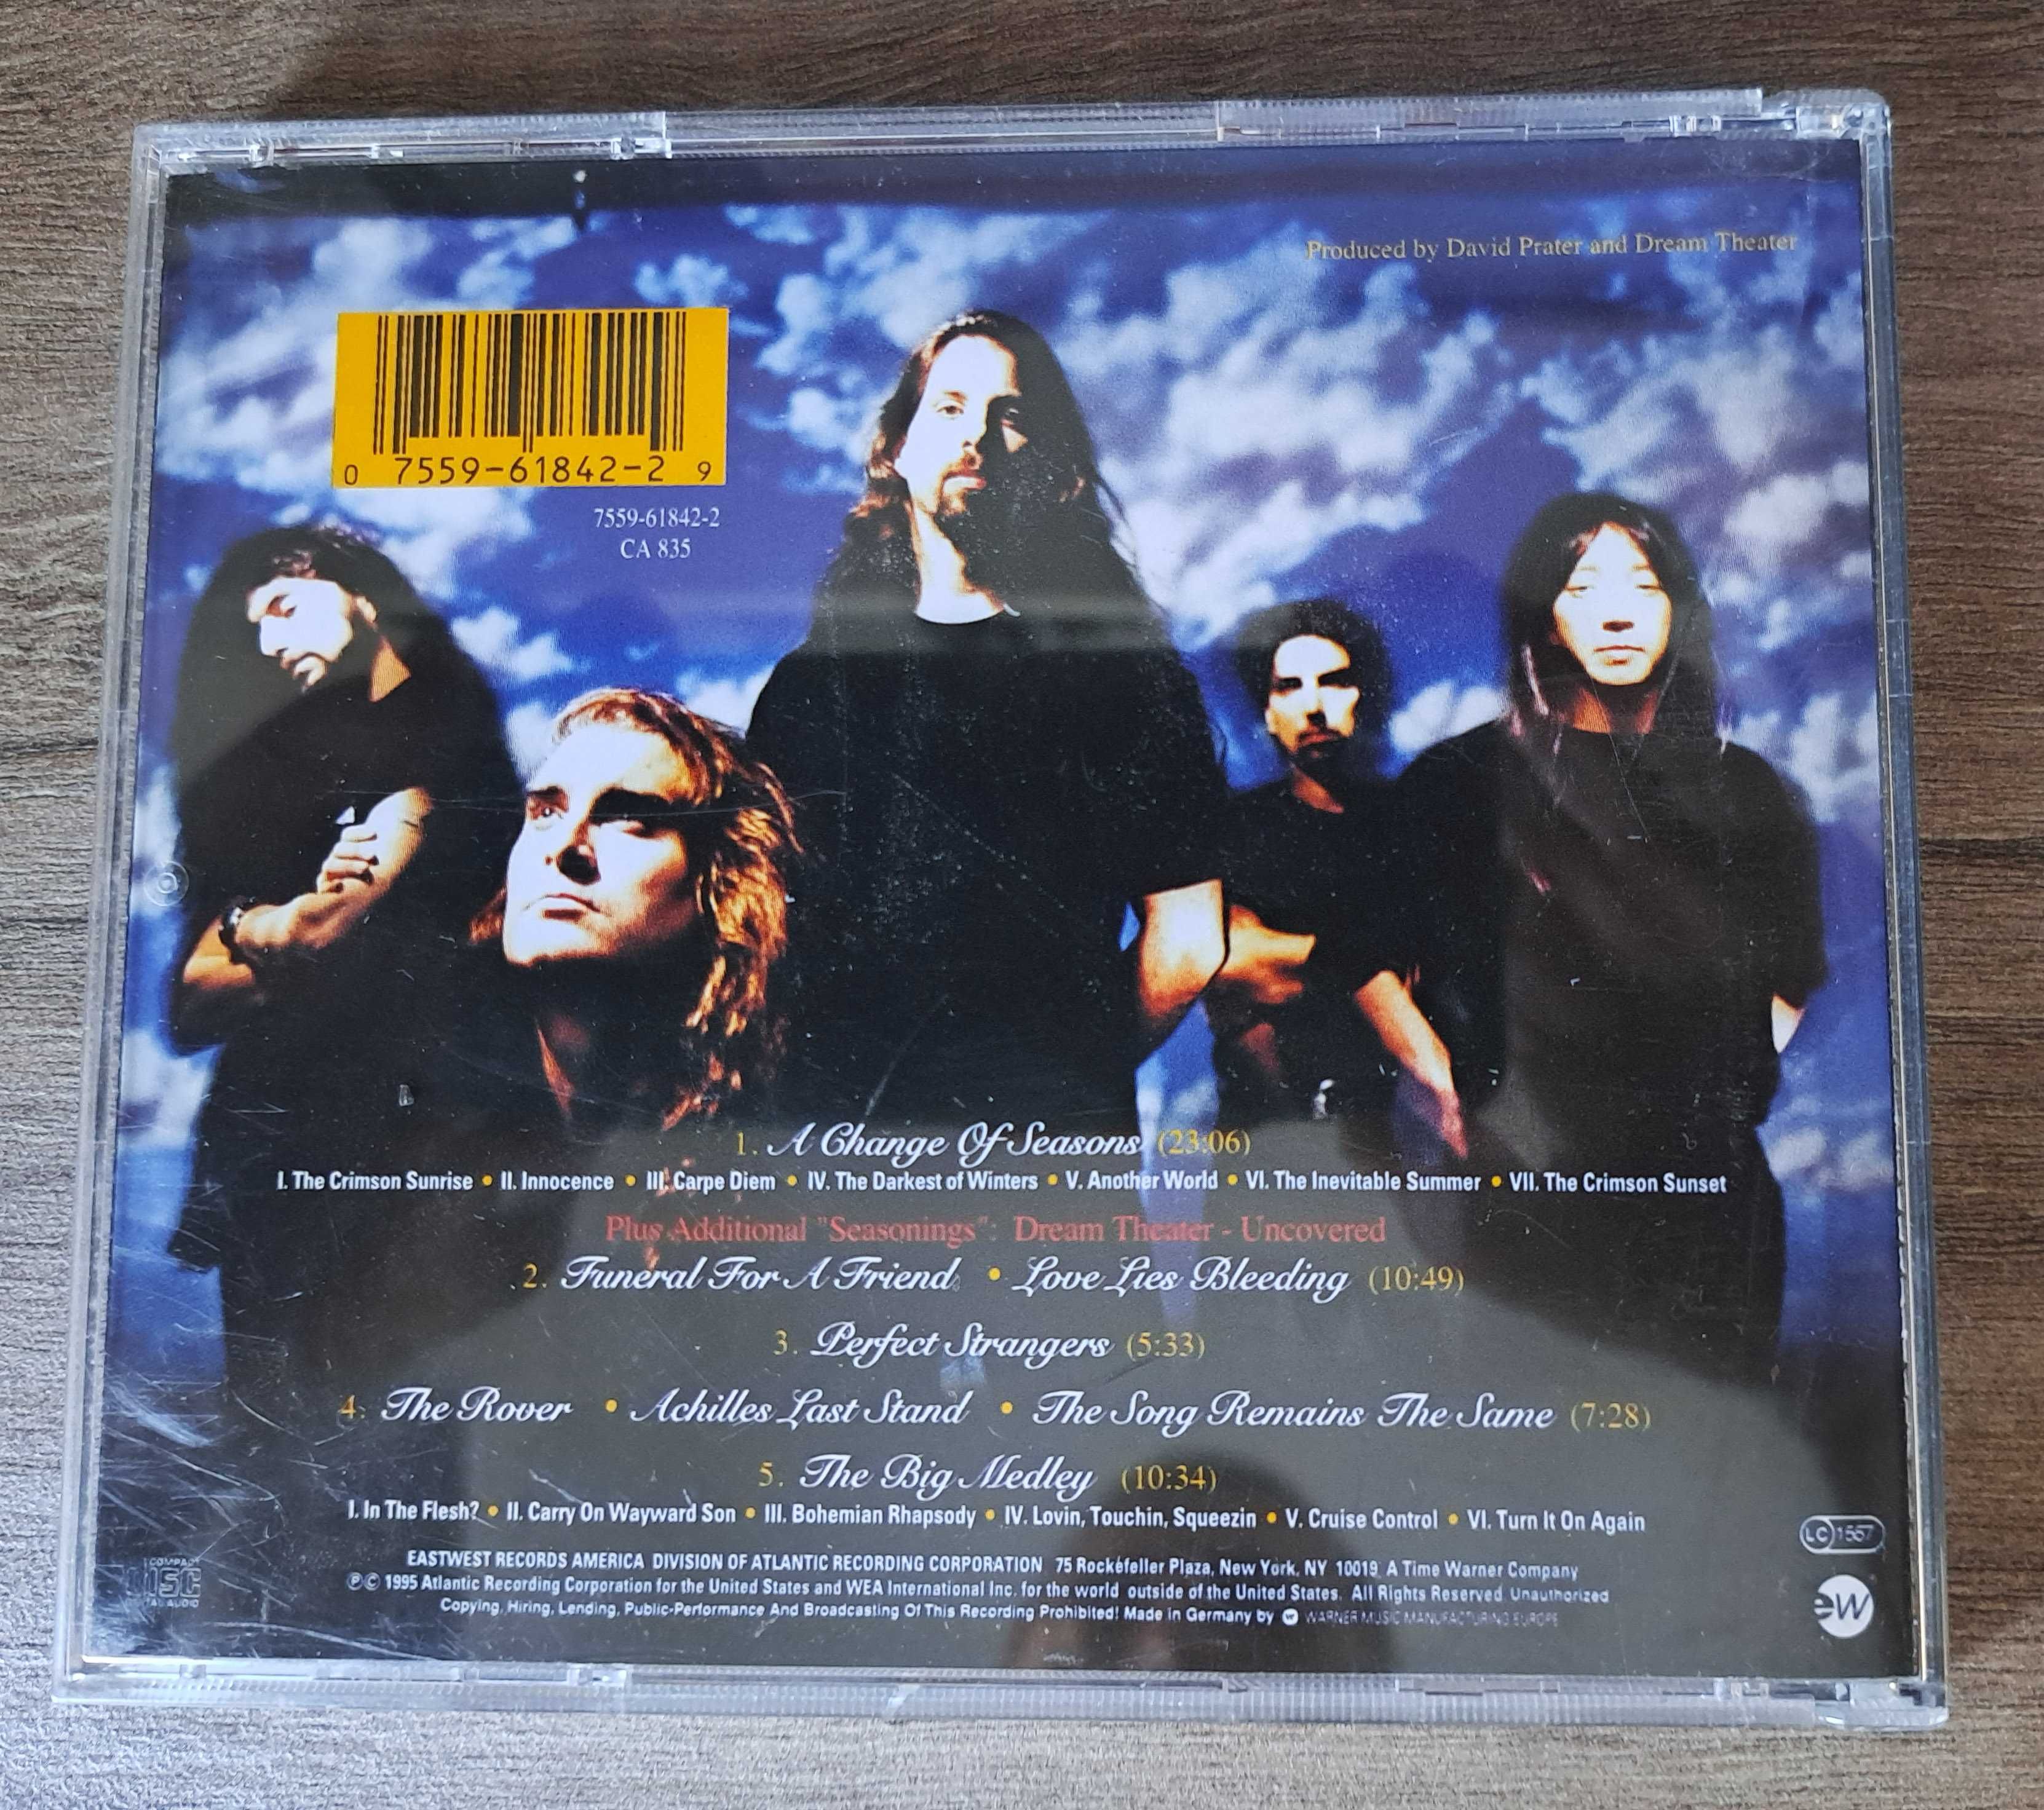 Dream Theater - A Change of Seasons CD original